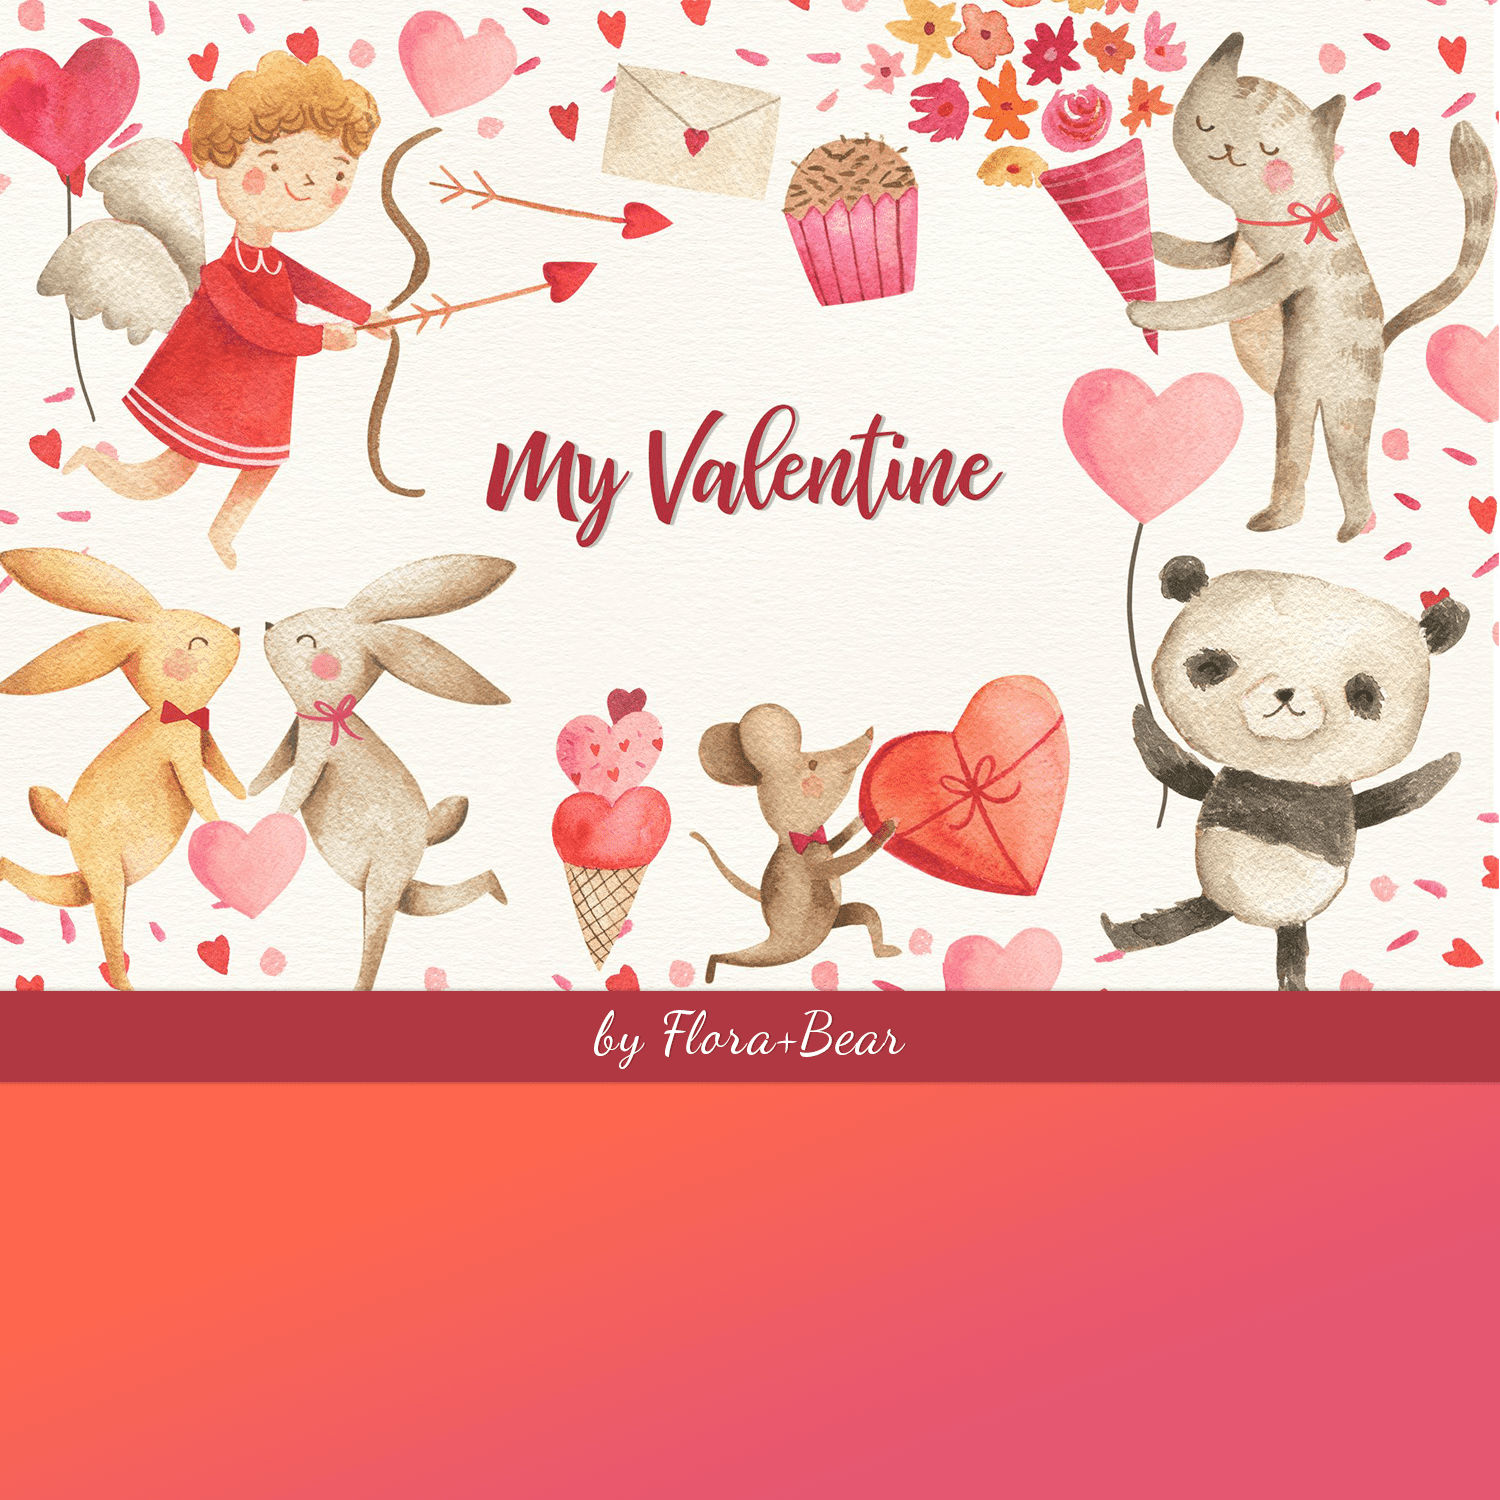 My Valentine cover.